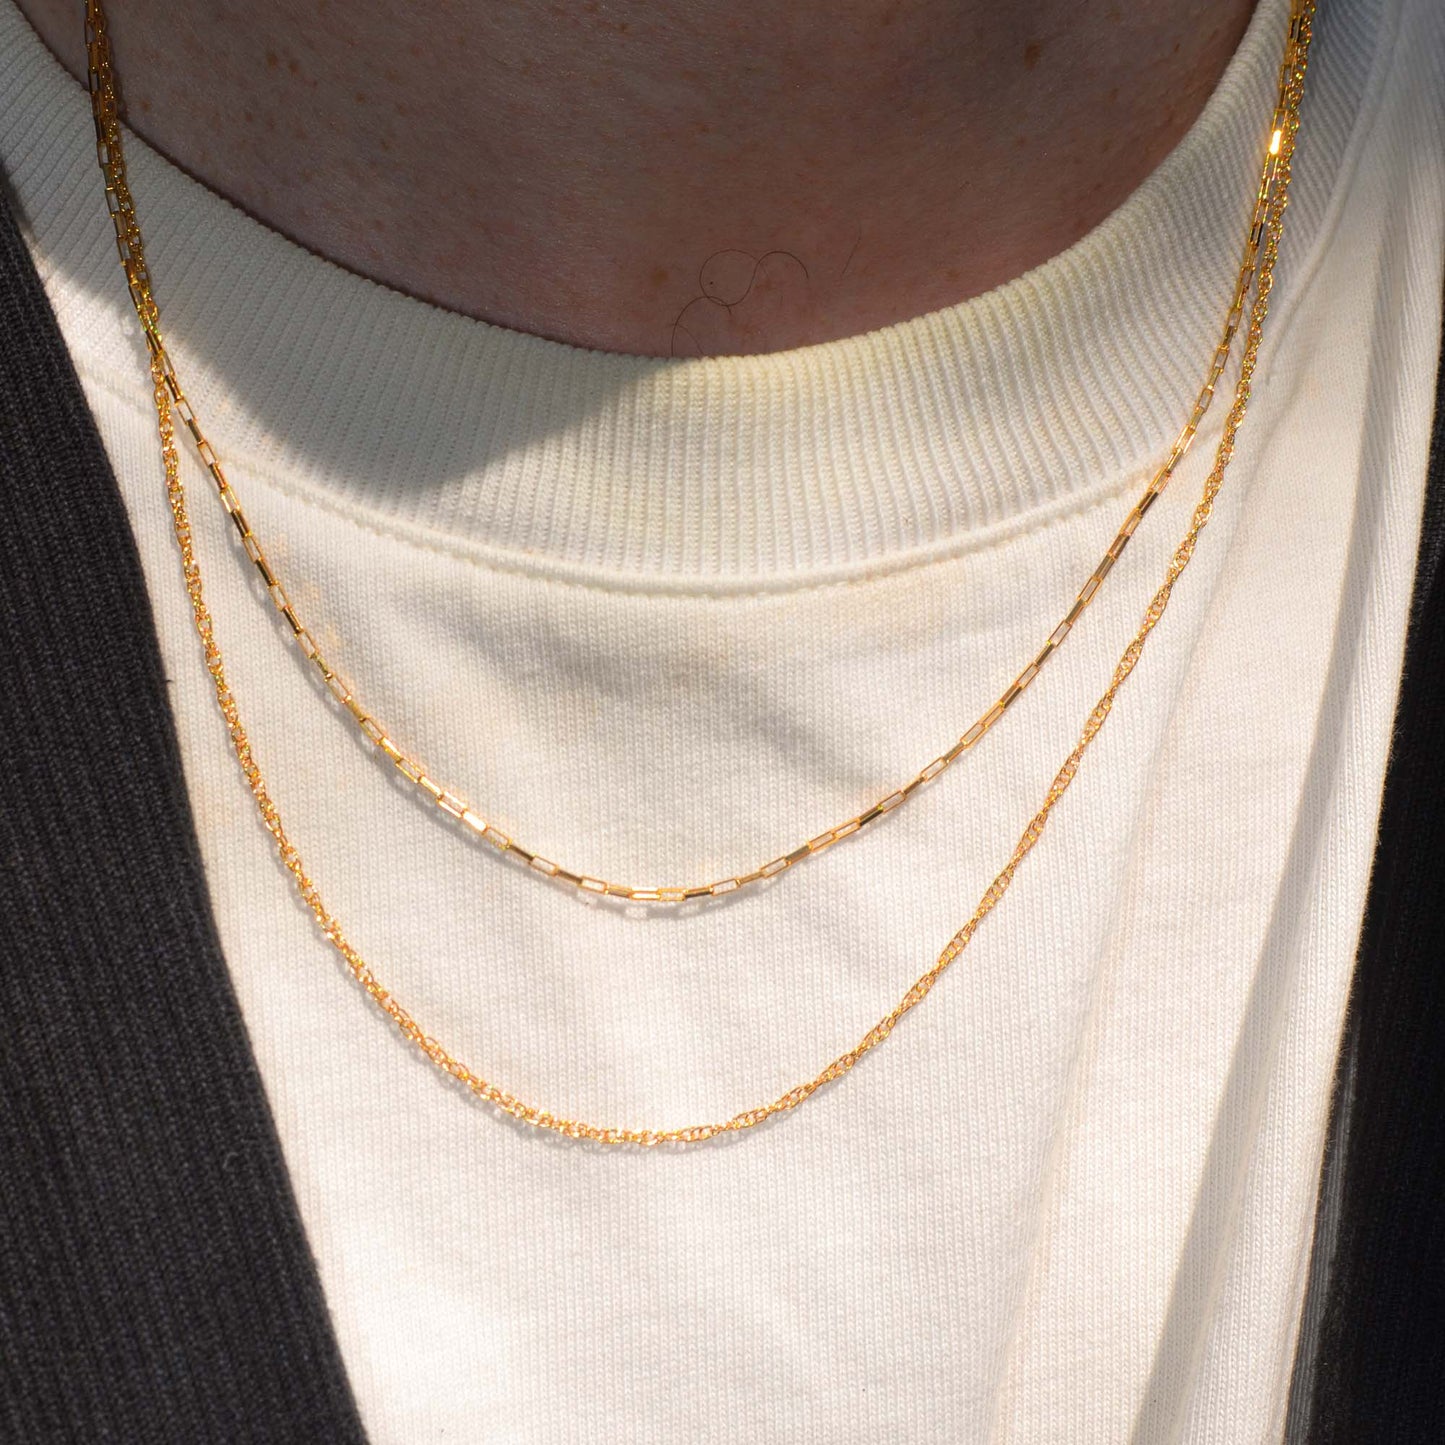 Basic twist chain ketting gold filled voor mannen